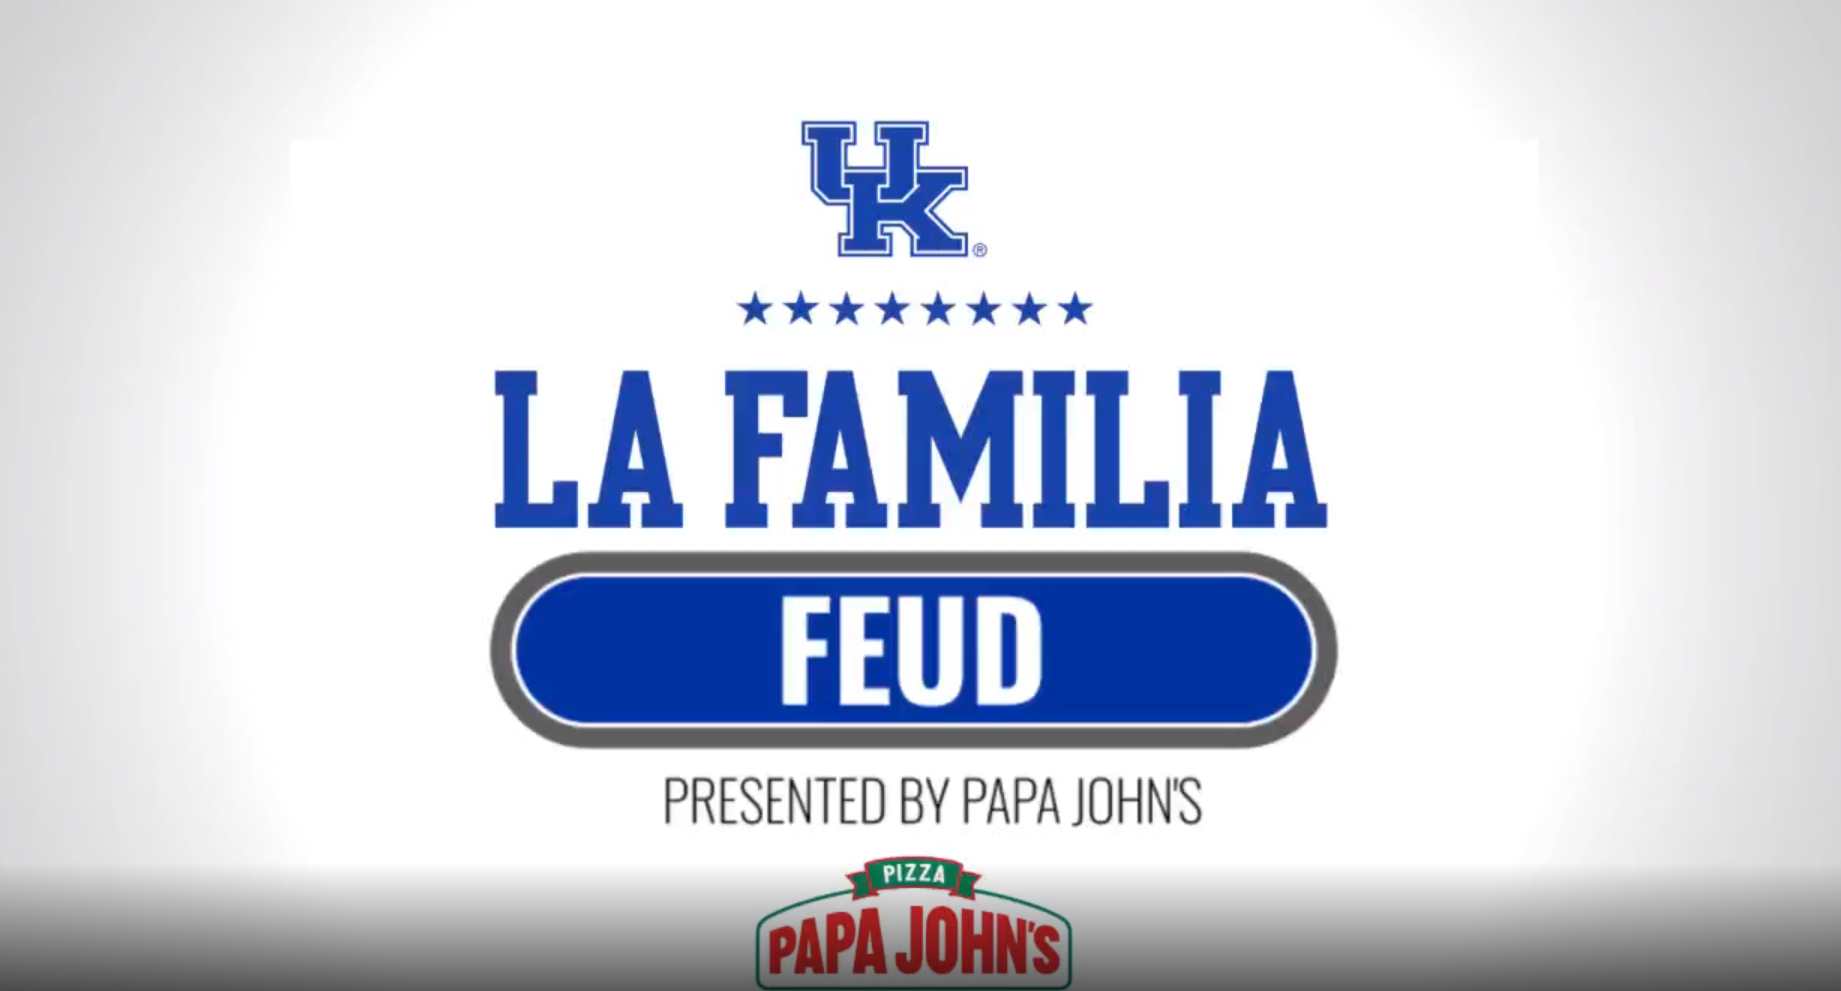 La Familia Feud Presented by Papa John's: Davion Mintz, Cam'Ron Fletcher and Isaiah Jackson